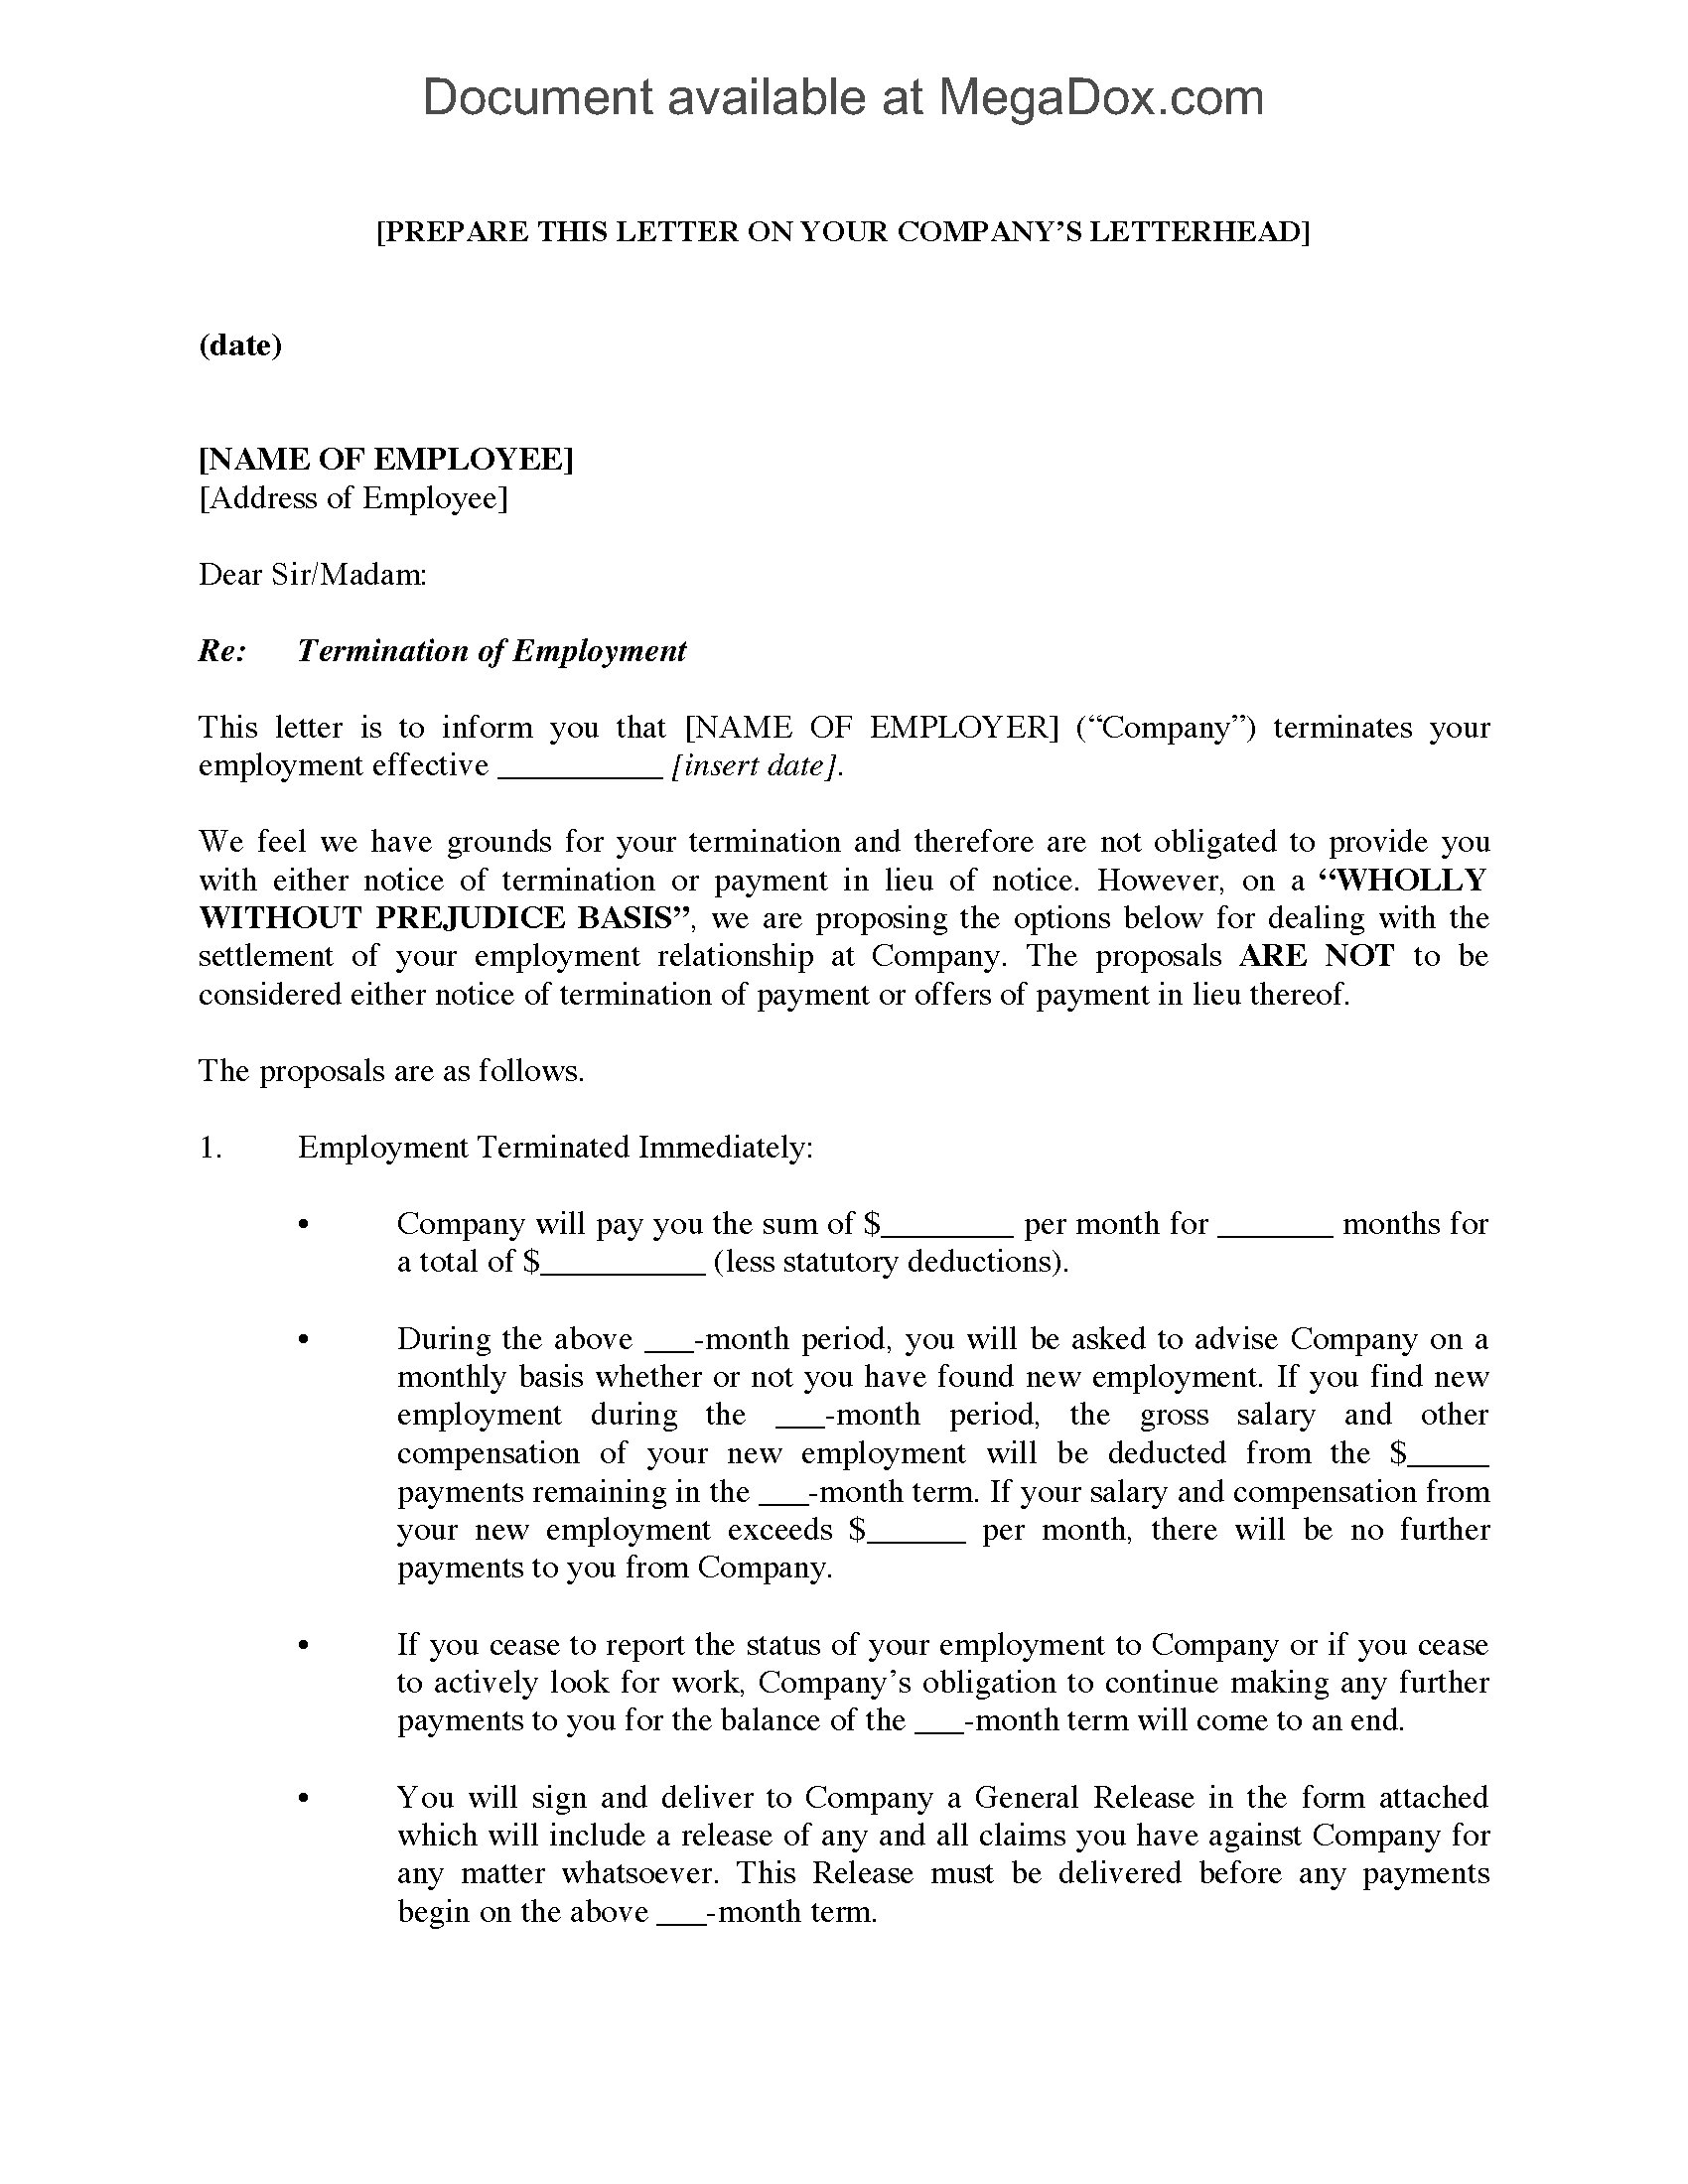 Employment Settlement Agreement Template Employment Termination Letter With Settlement Proposal